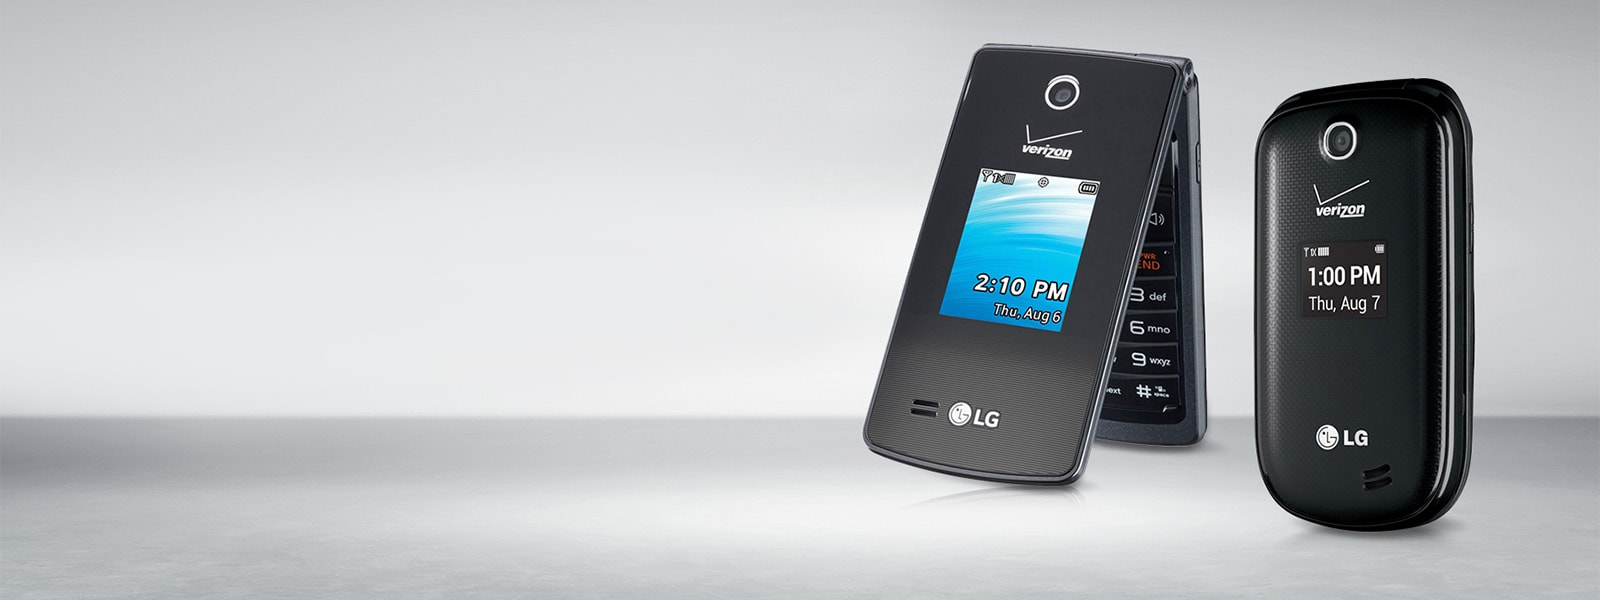 LG Verizon Low Cost Cell Phones & Smartphones l LG USA